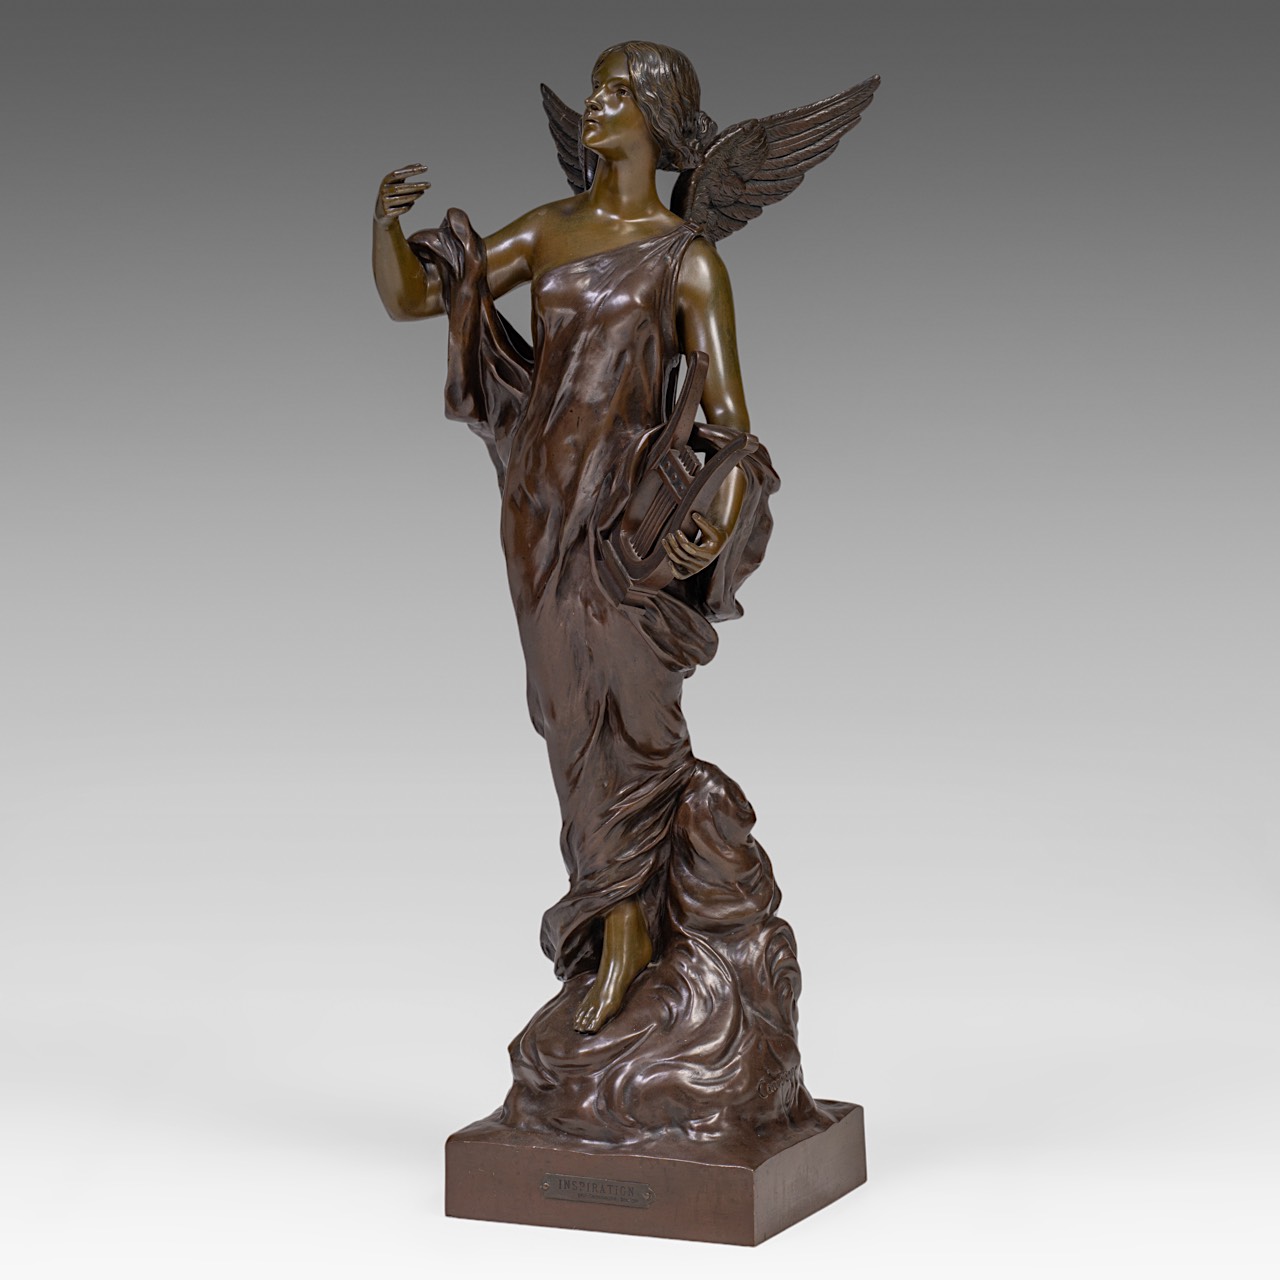 Pierre Etienne Daniel Campagne (1851-1914), 'L'inspiration', patinated bronze, H 85 cm - Image 2 of 26